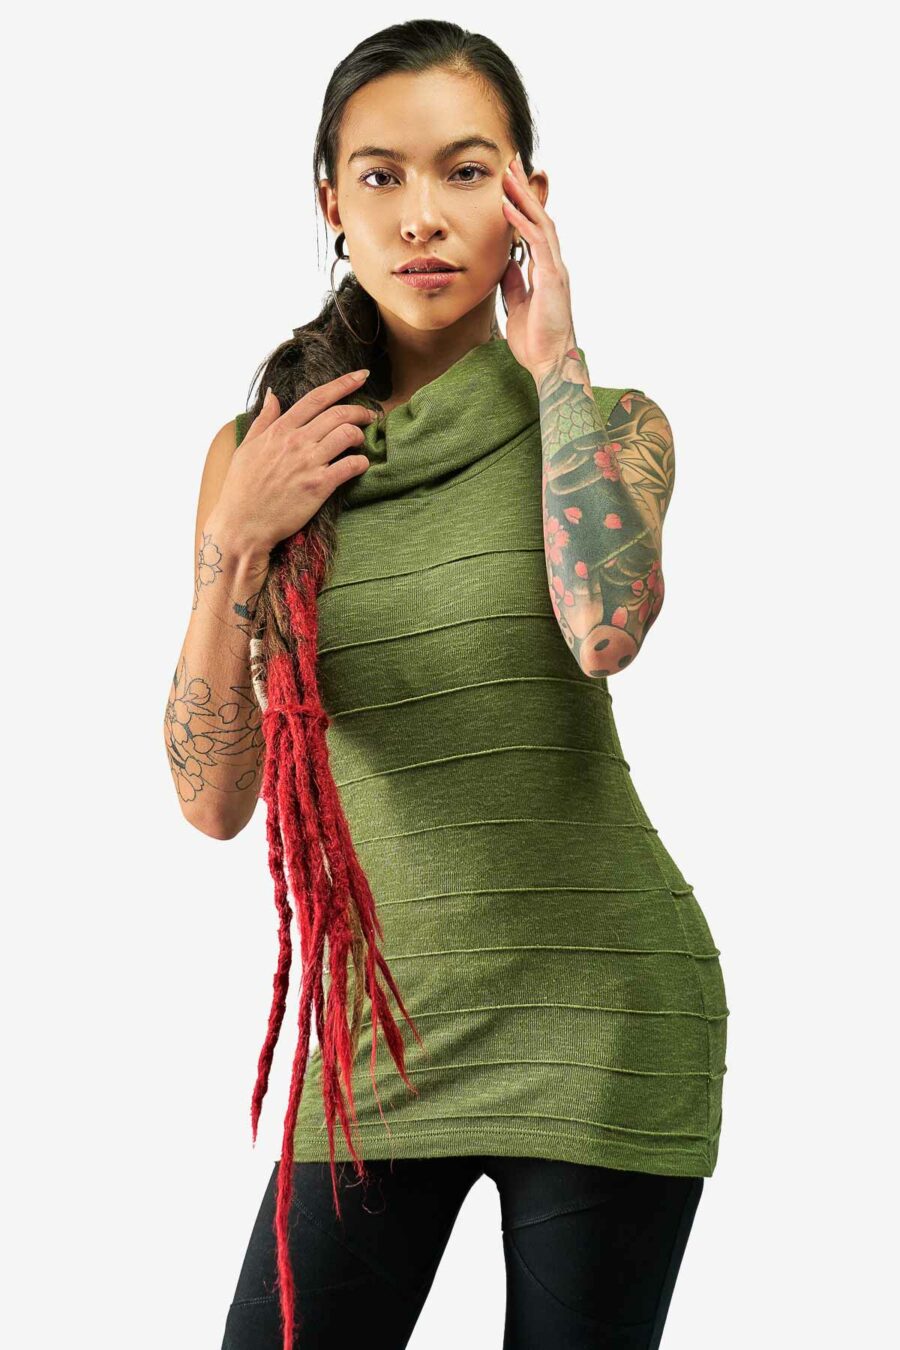 aurora-top-green-sleeveless-turtleneck-top-for-women-alternative-fashion-and-festival-clothing-avanyah